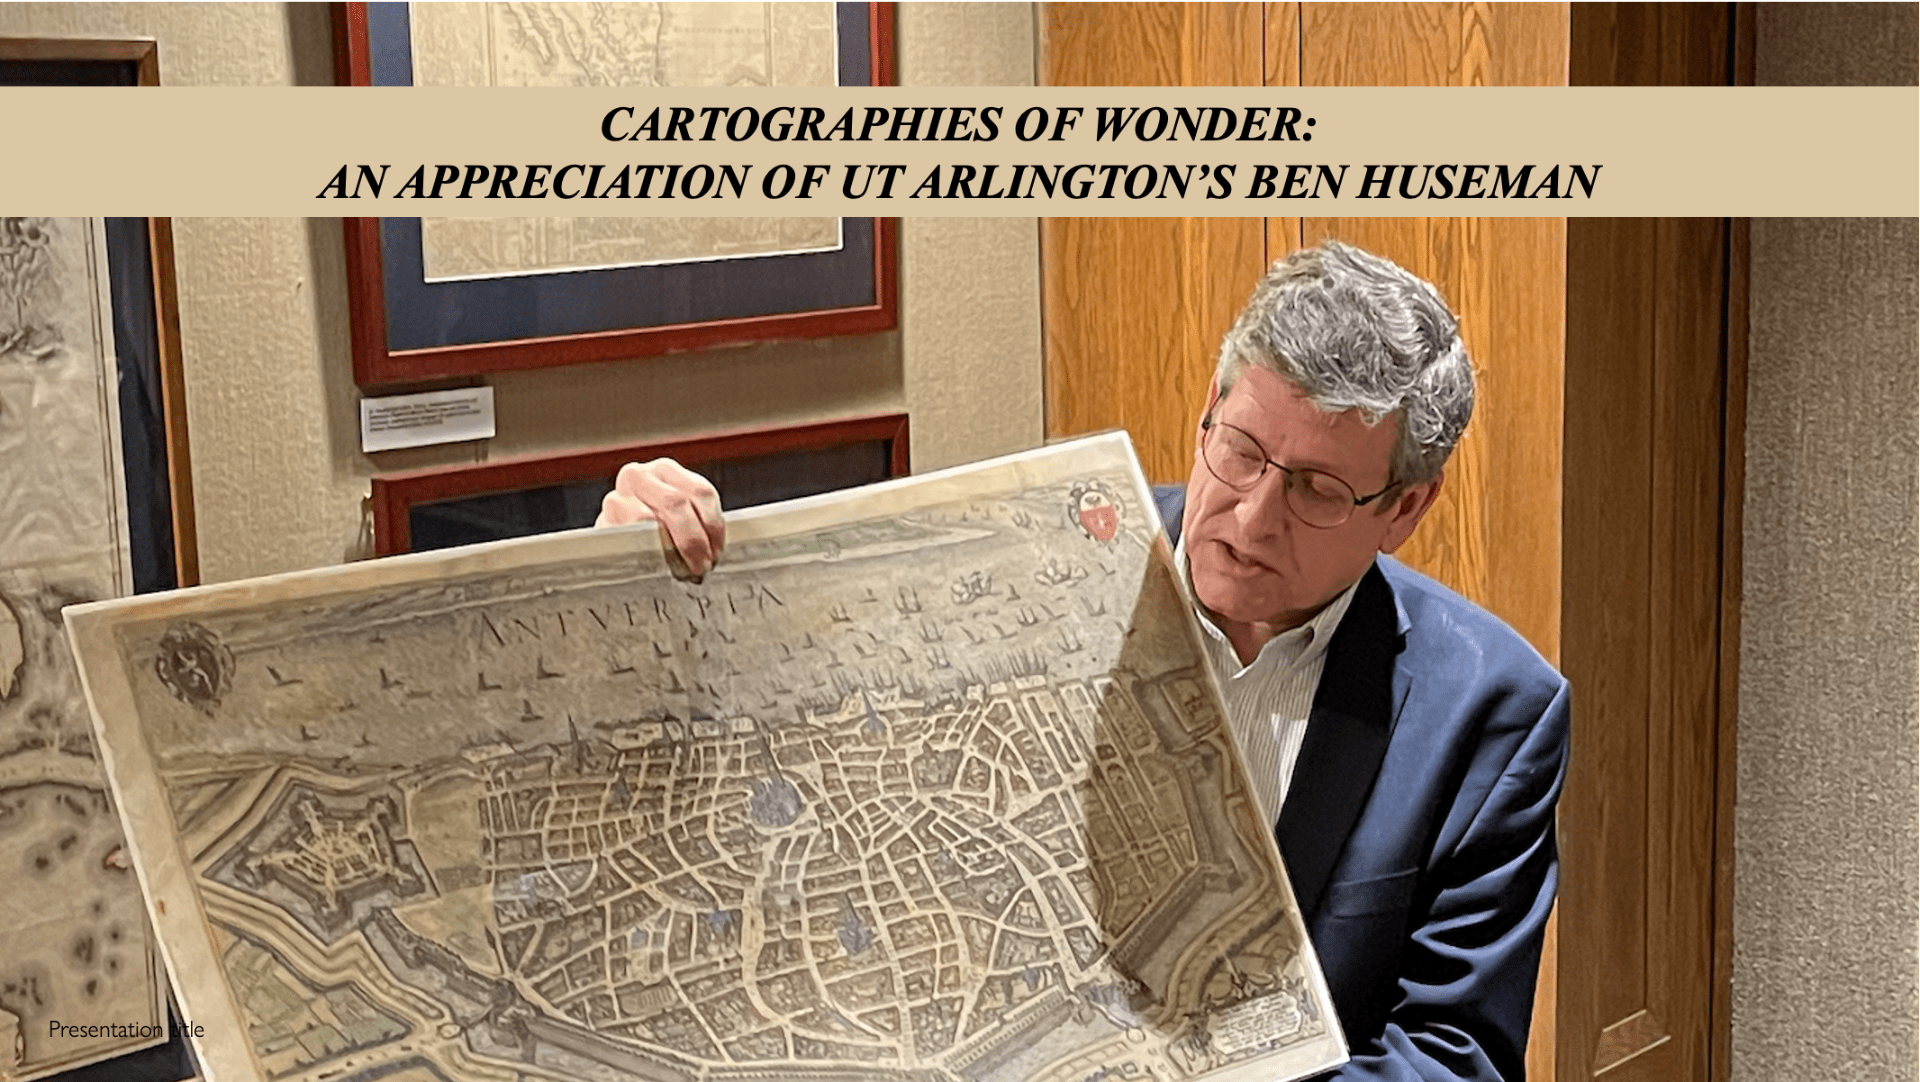 Title panel reading "Cartographies of Wonder: An Appreciation of UT Arlington's Ben Huseman," overlaid on a photo of Ben Huseman showing a map.